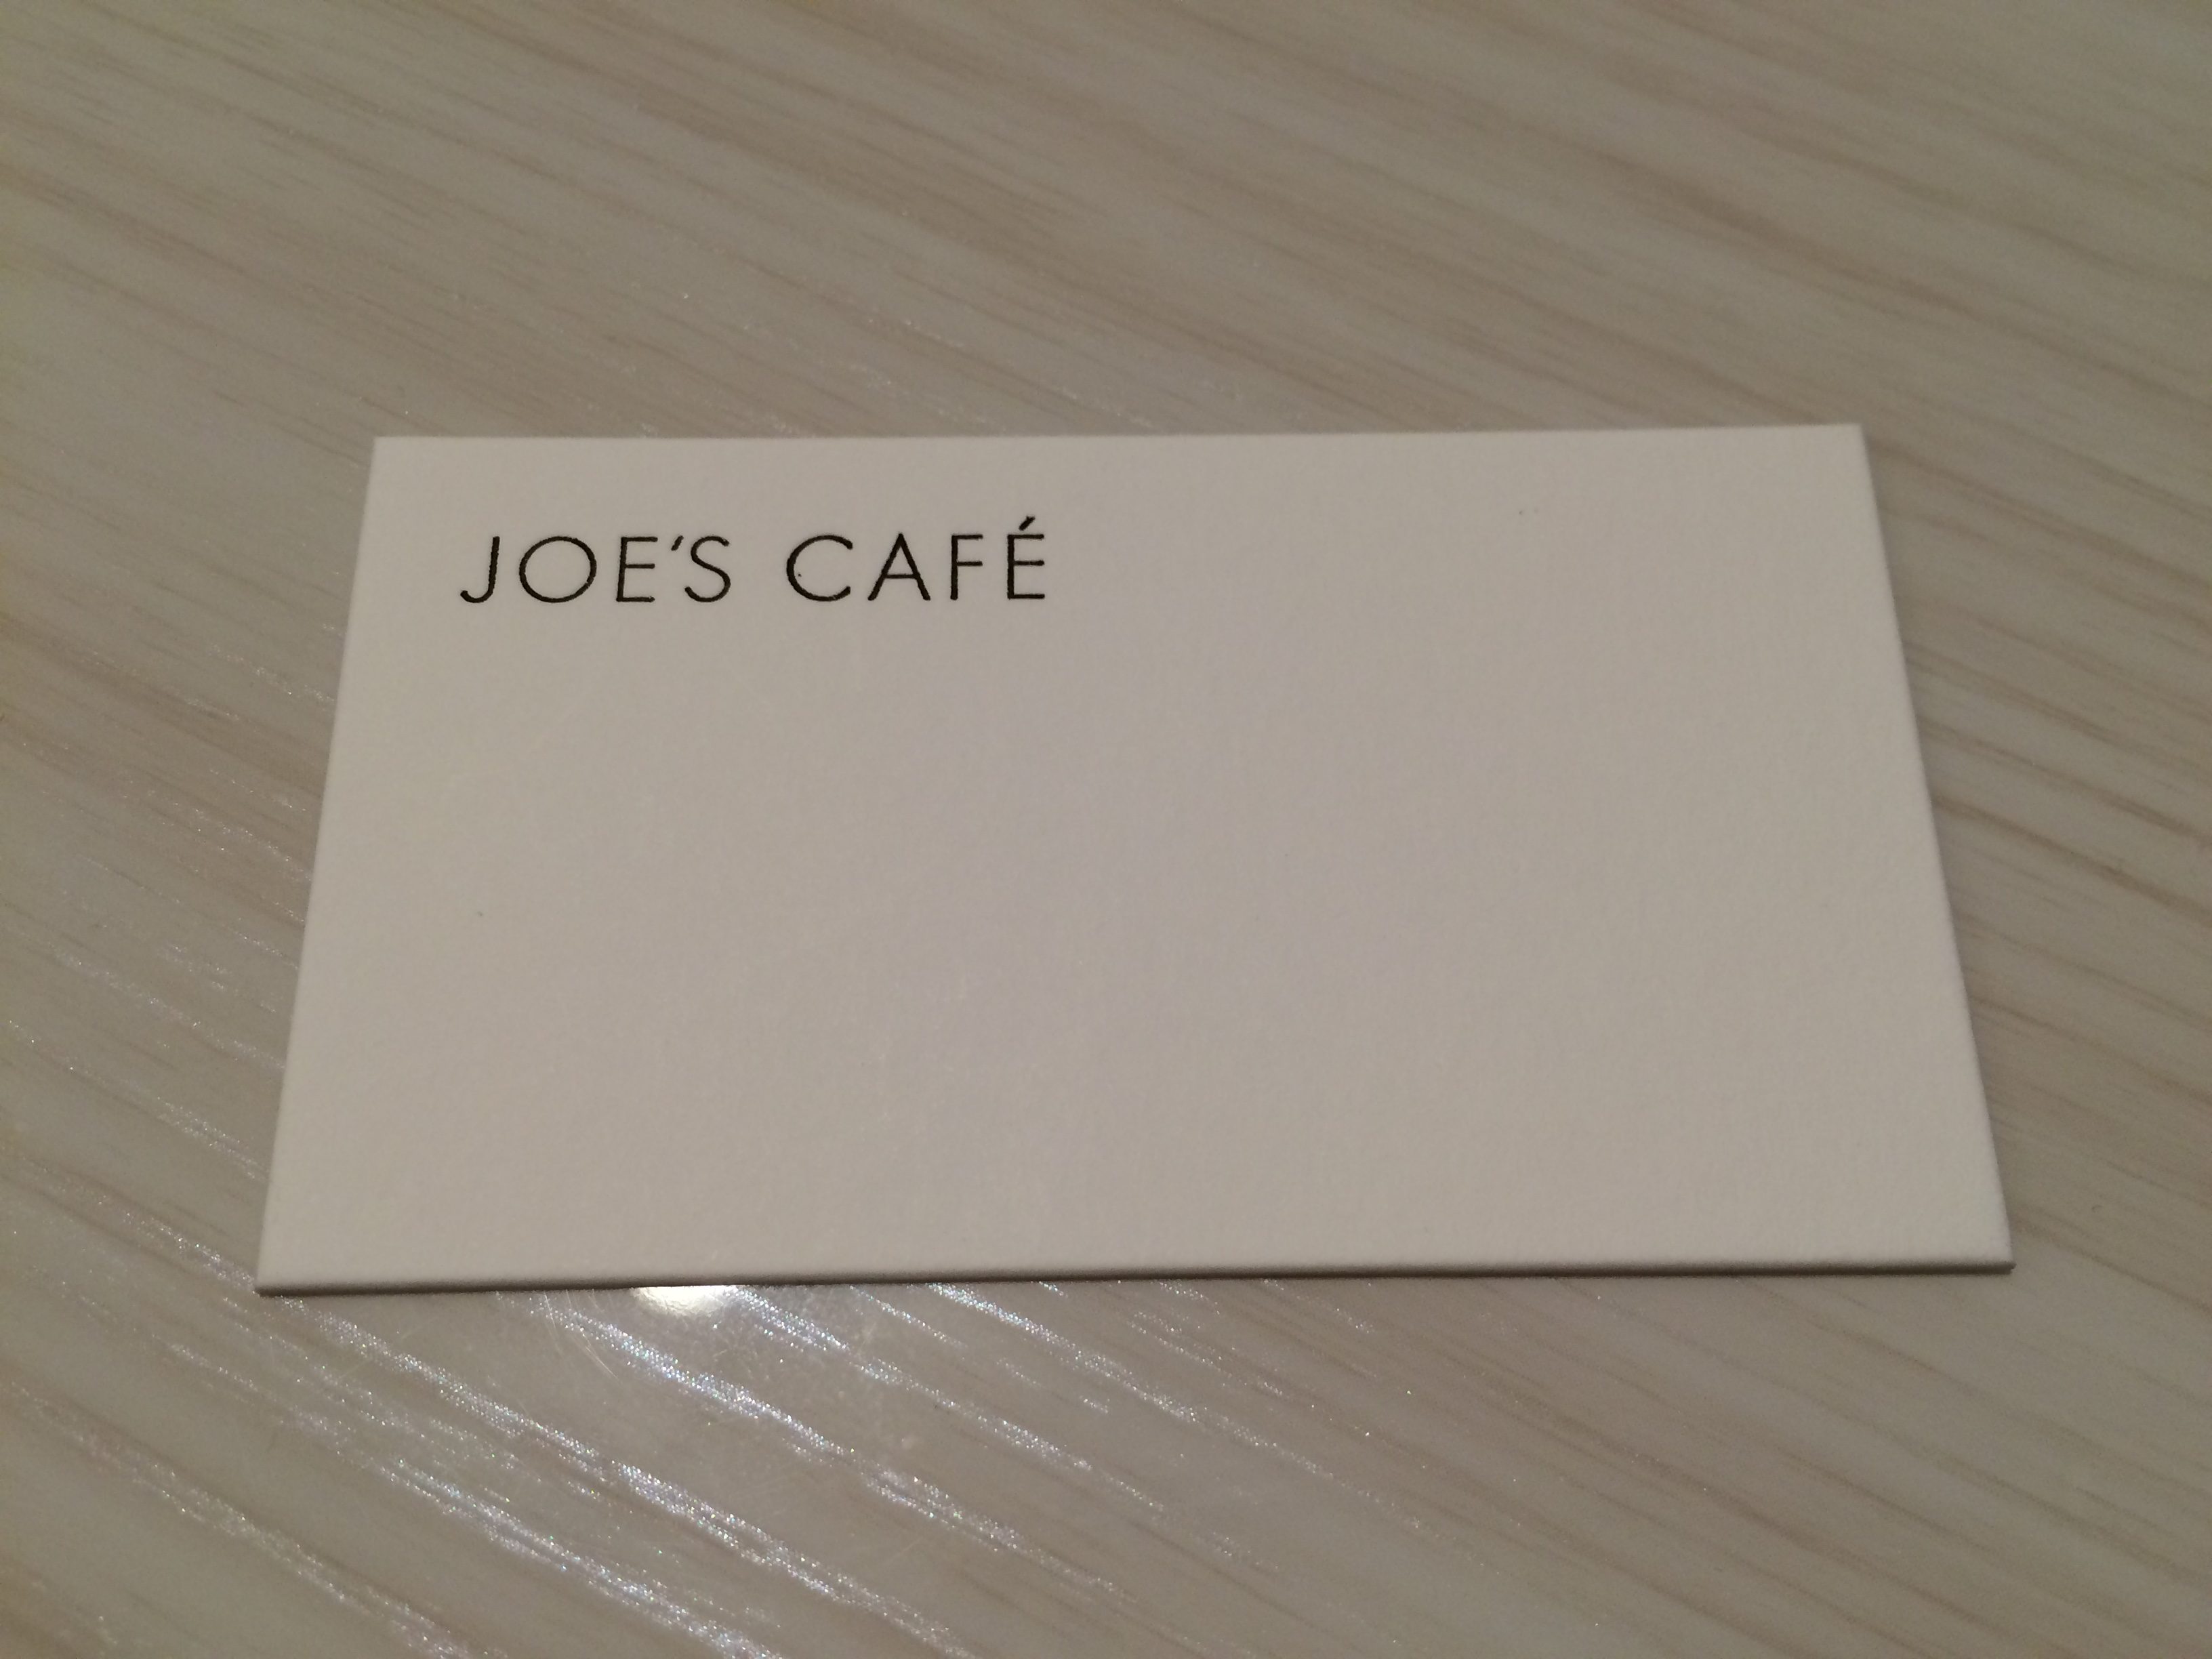 JOE'S CAFEの名刺